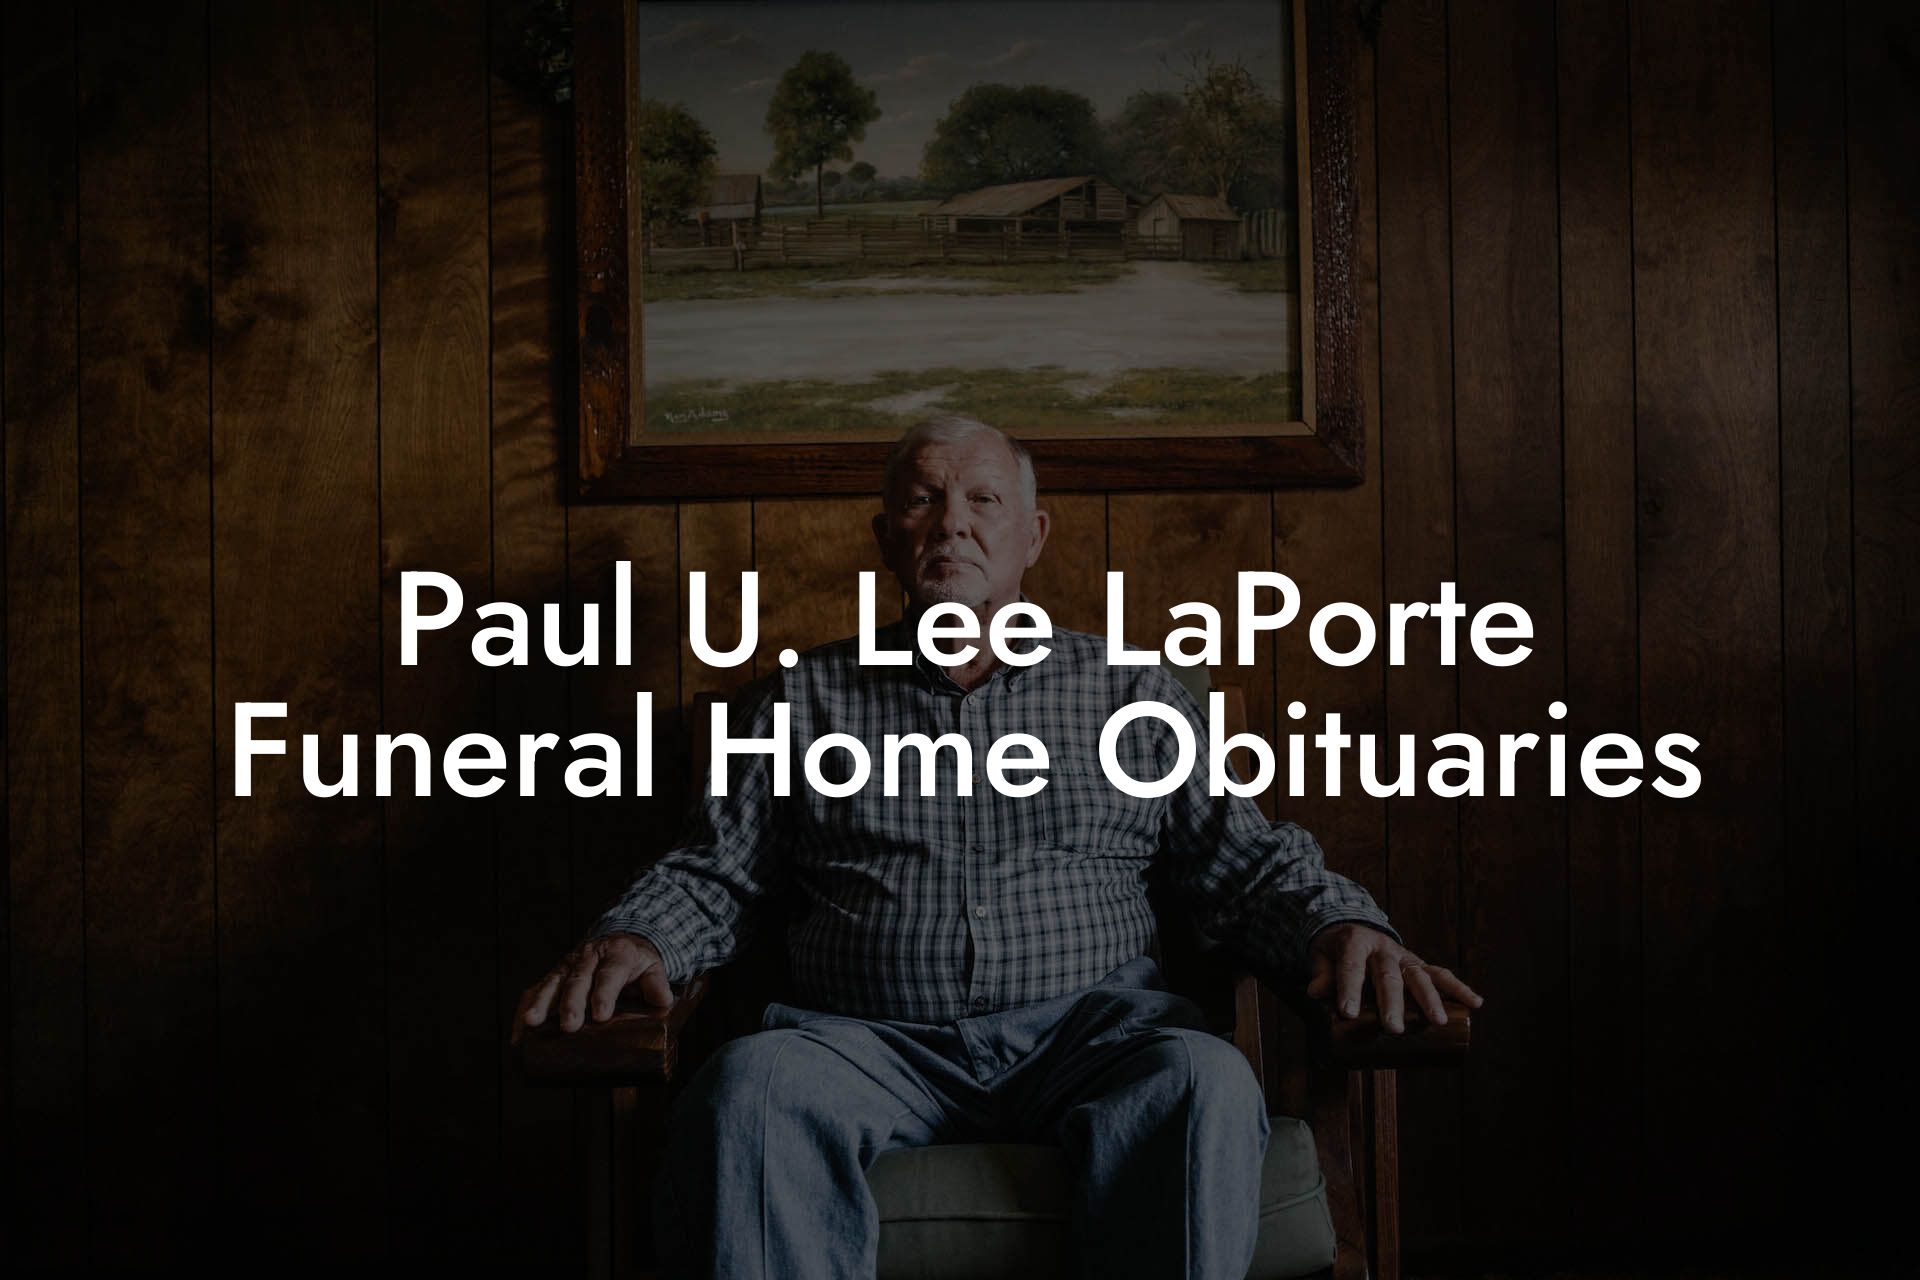 Paul U. Lee LaPorte Funeral Home Obituaries